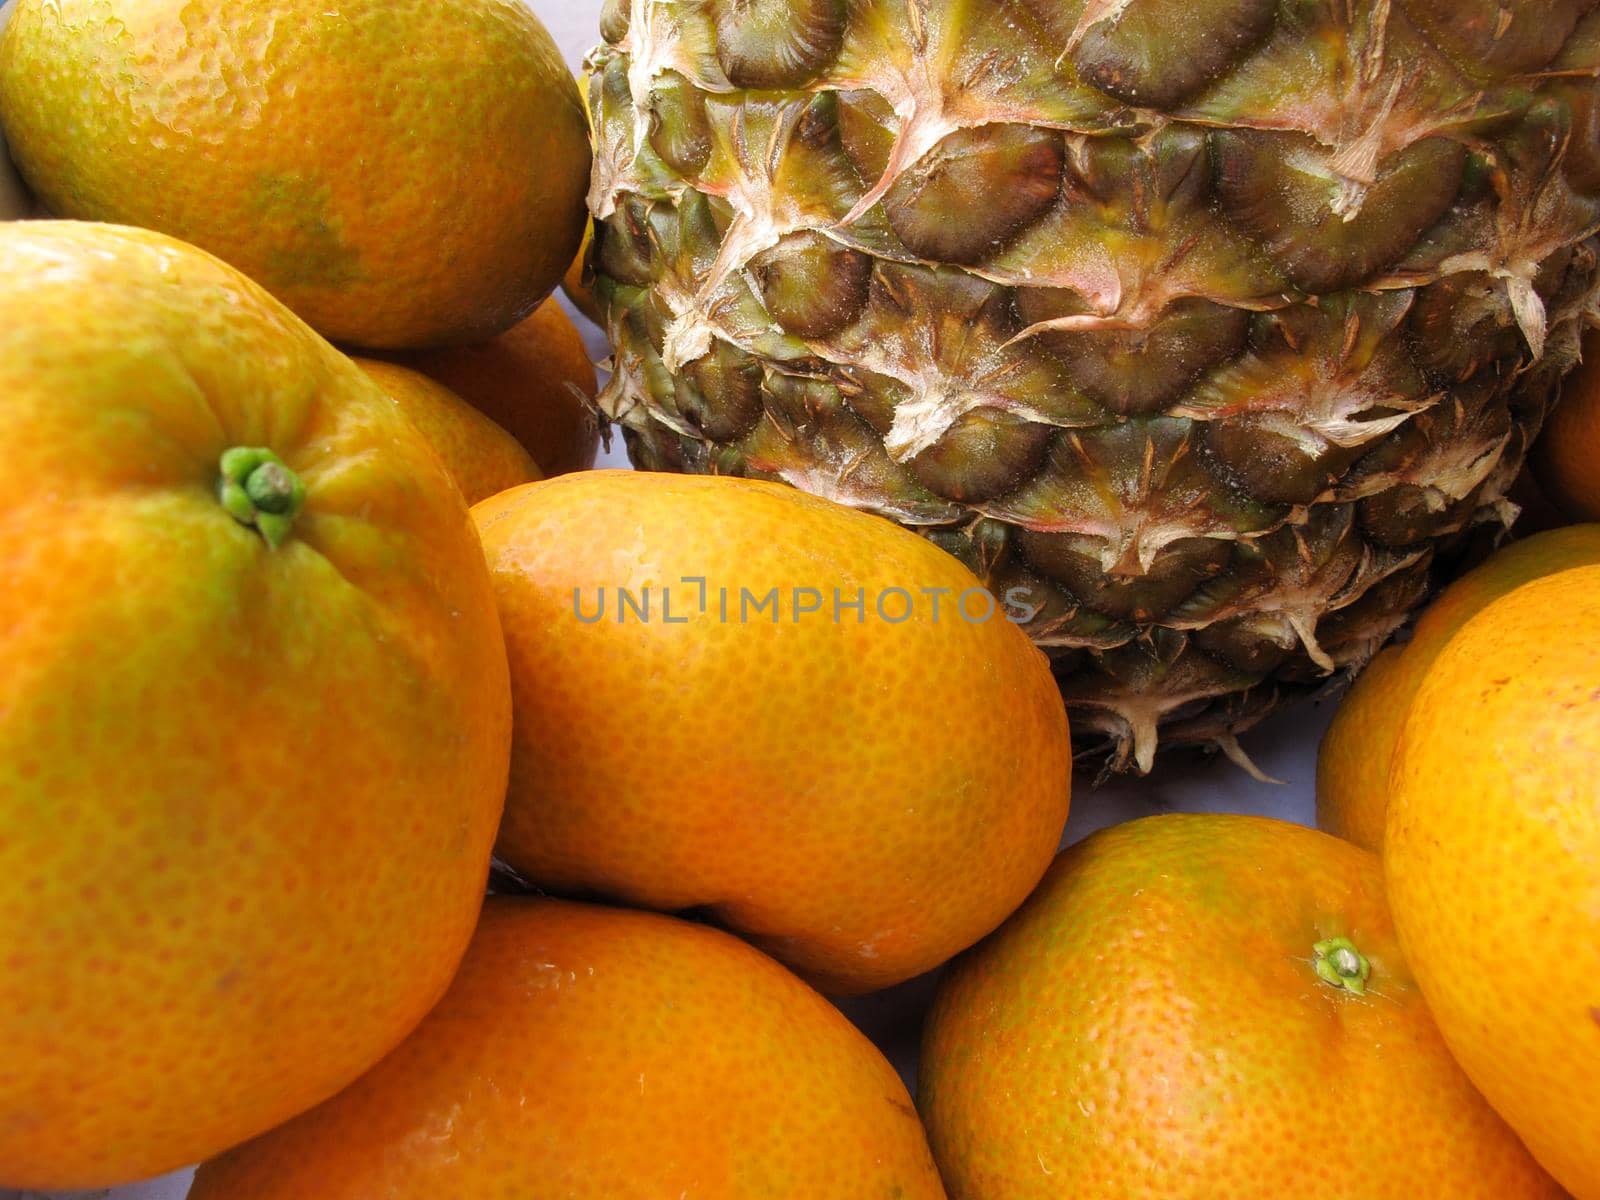 Fresh pineapple & tangerine fruit collection closeup